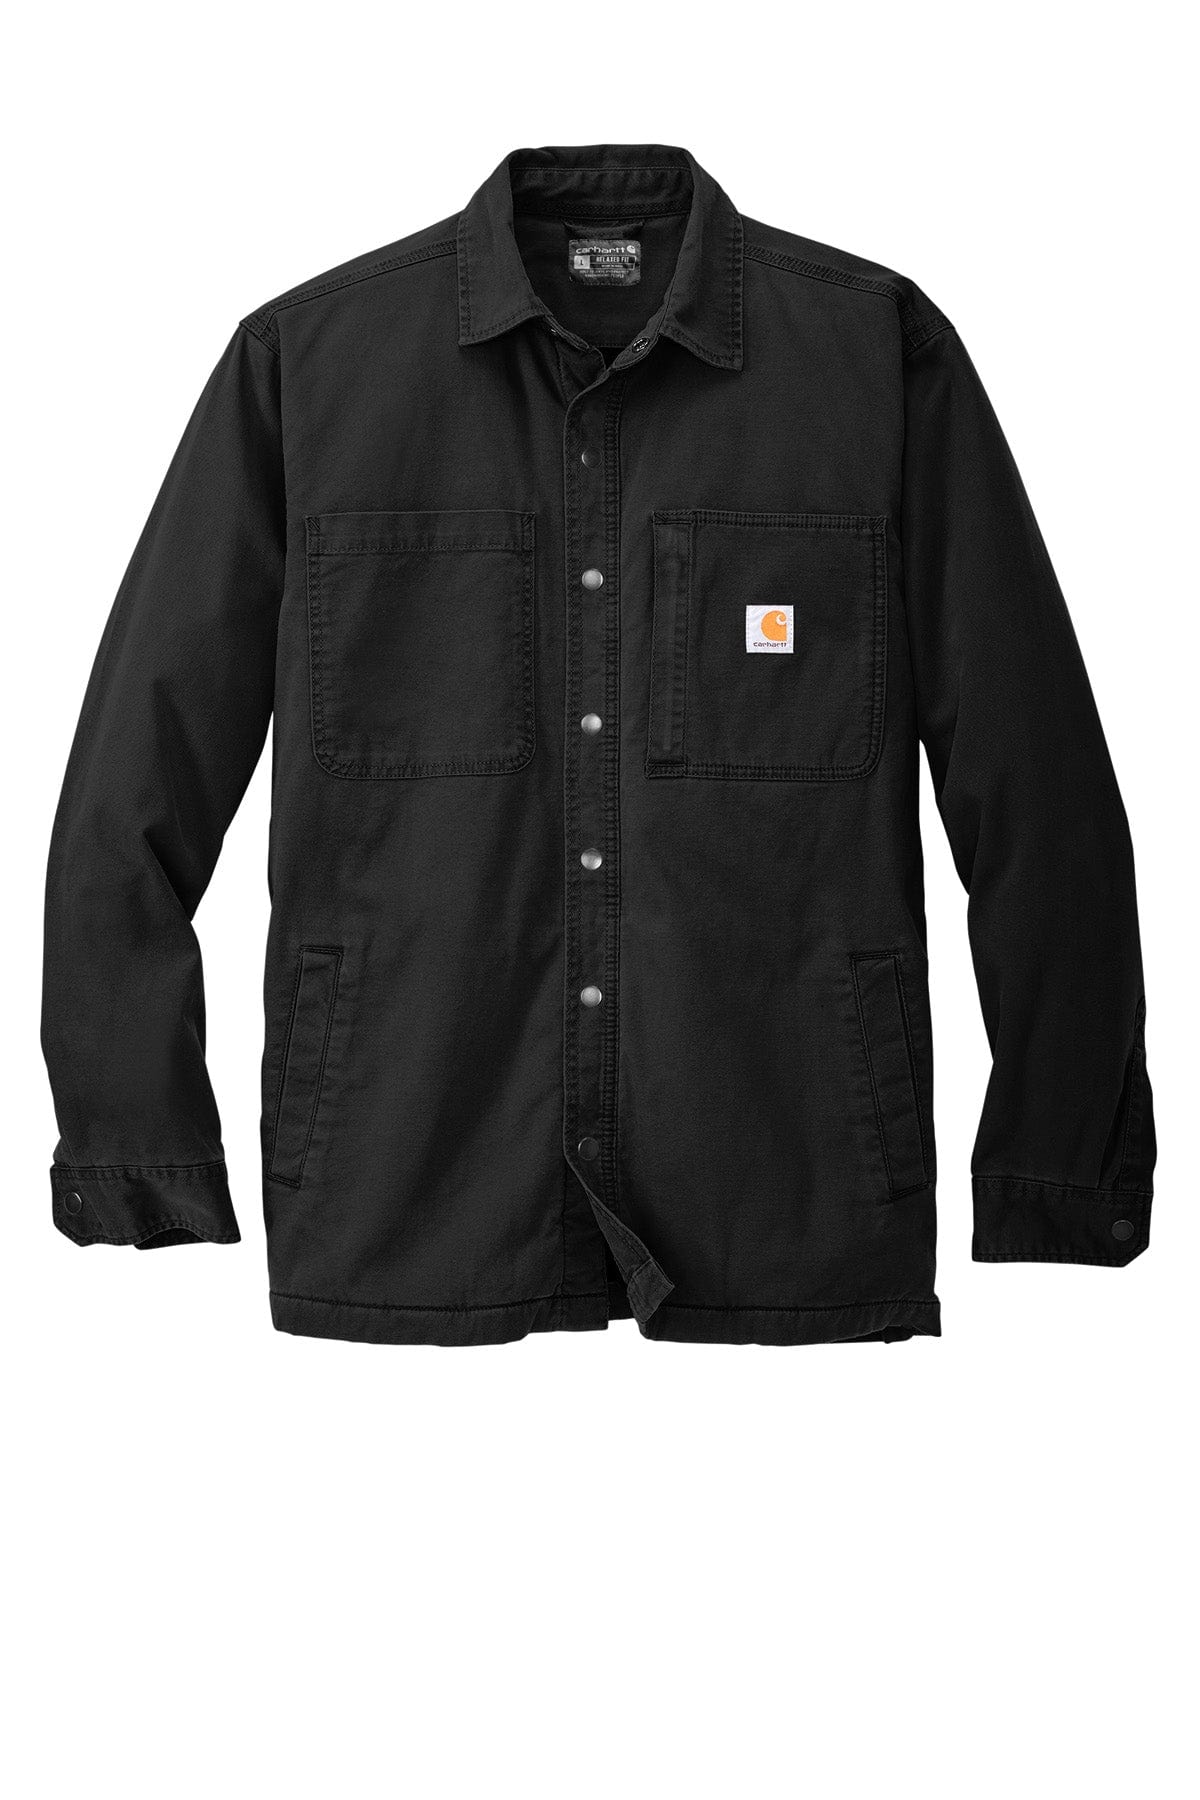 Black / SM Custom Carhartt Rugged Flex Fleece-Lined Shirt Jacket